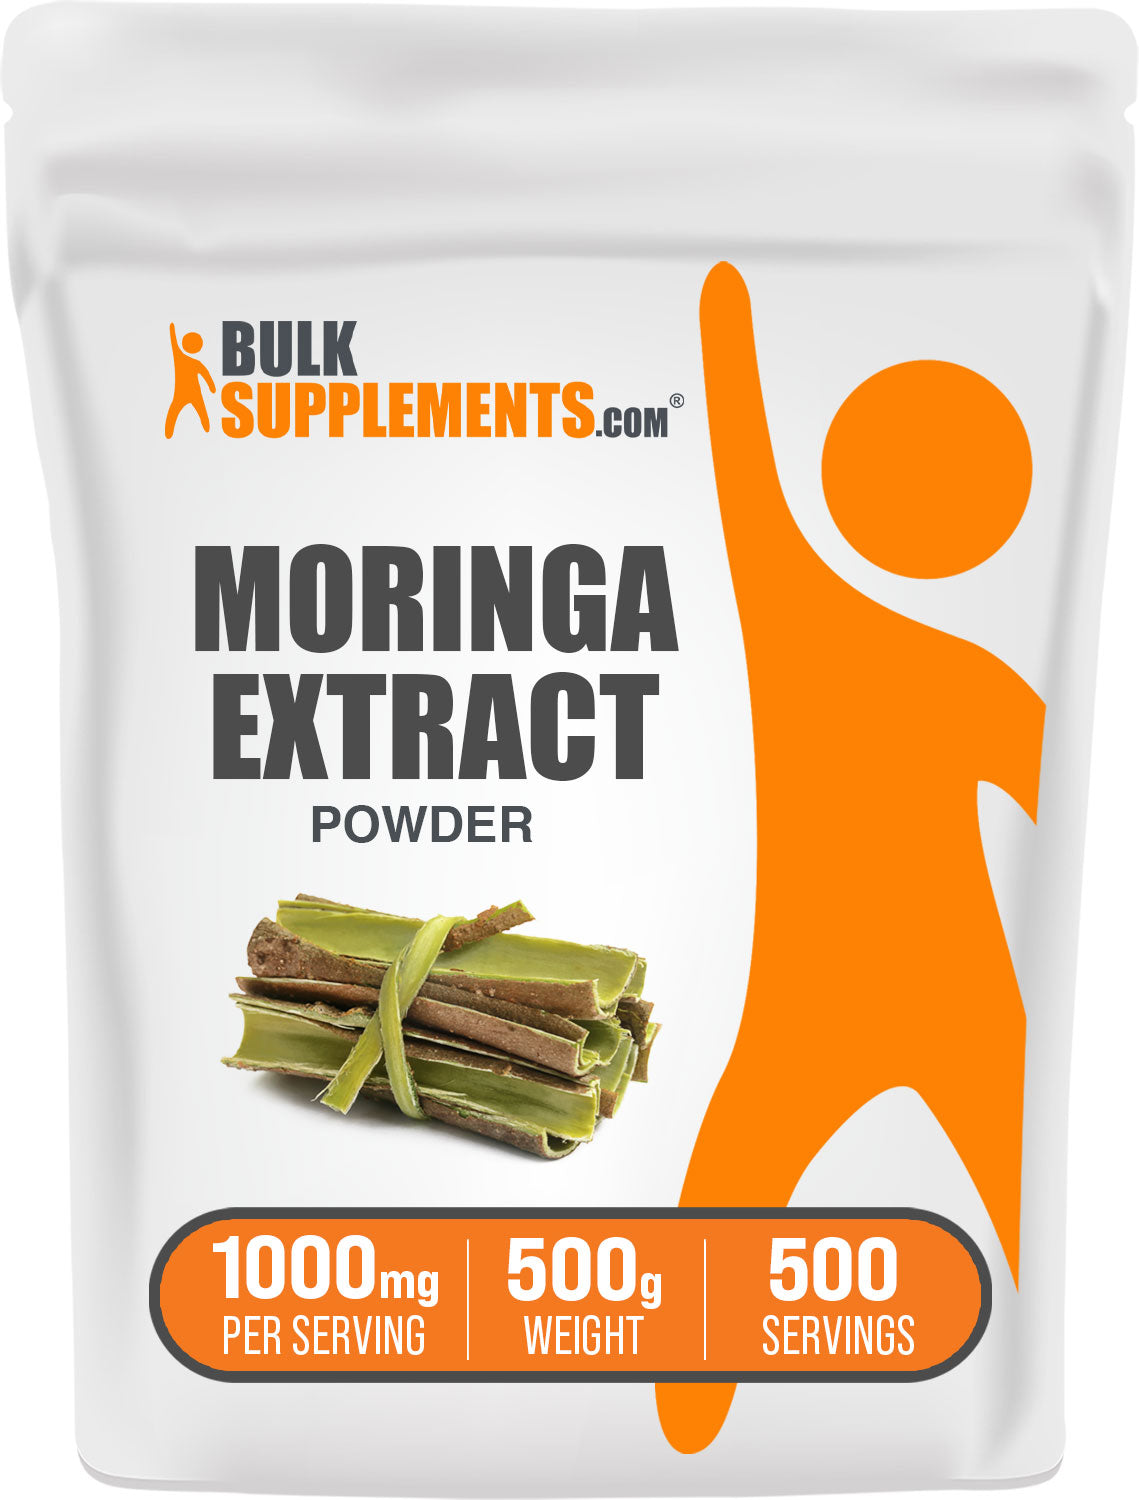 BulkSupplements.com Moringa Extract Powder 500g Bag